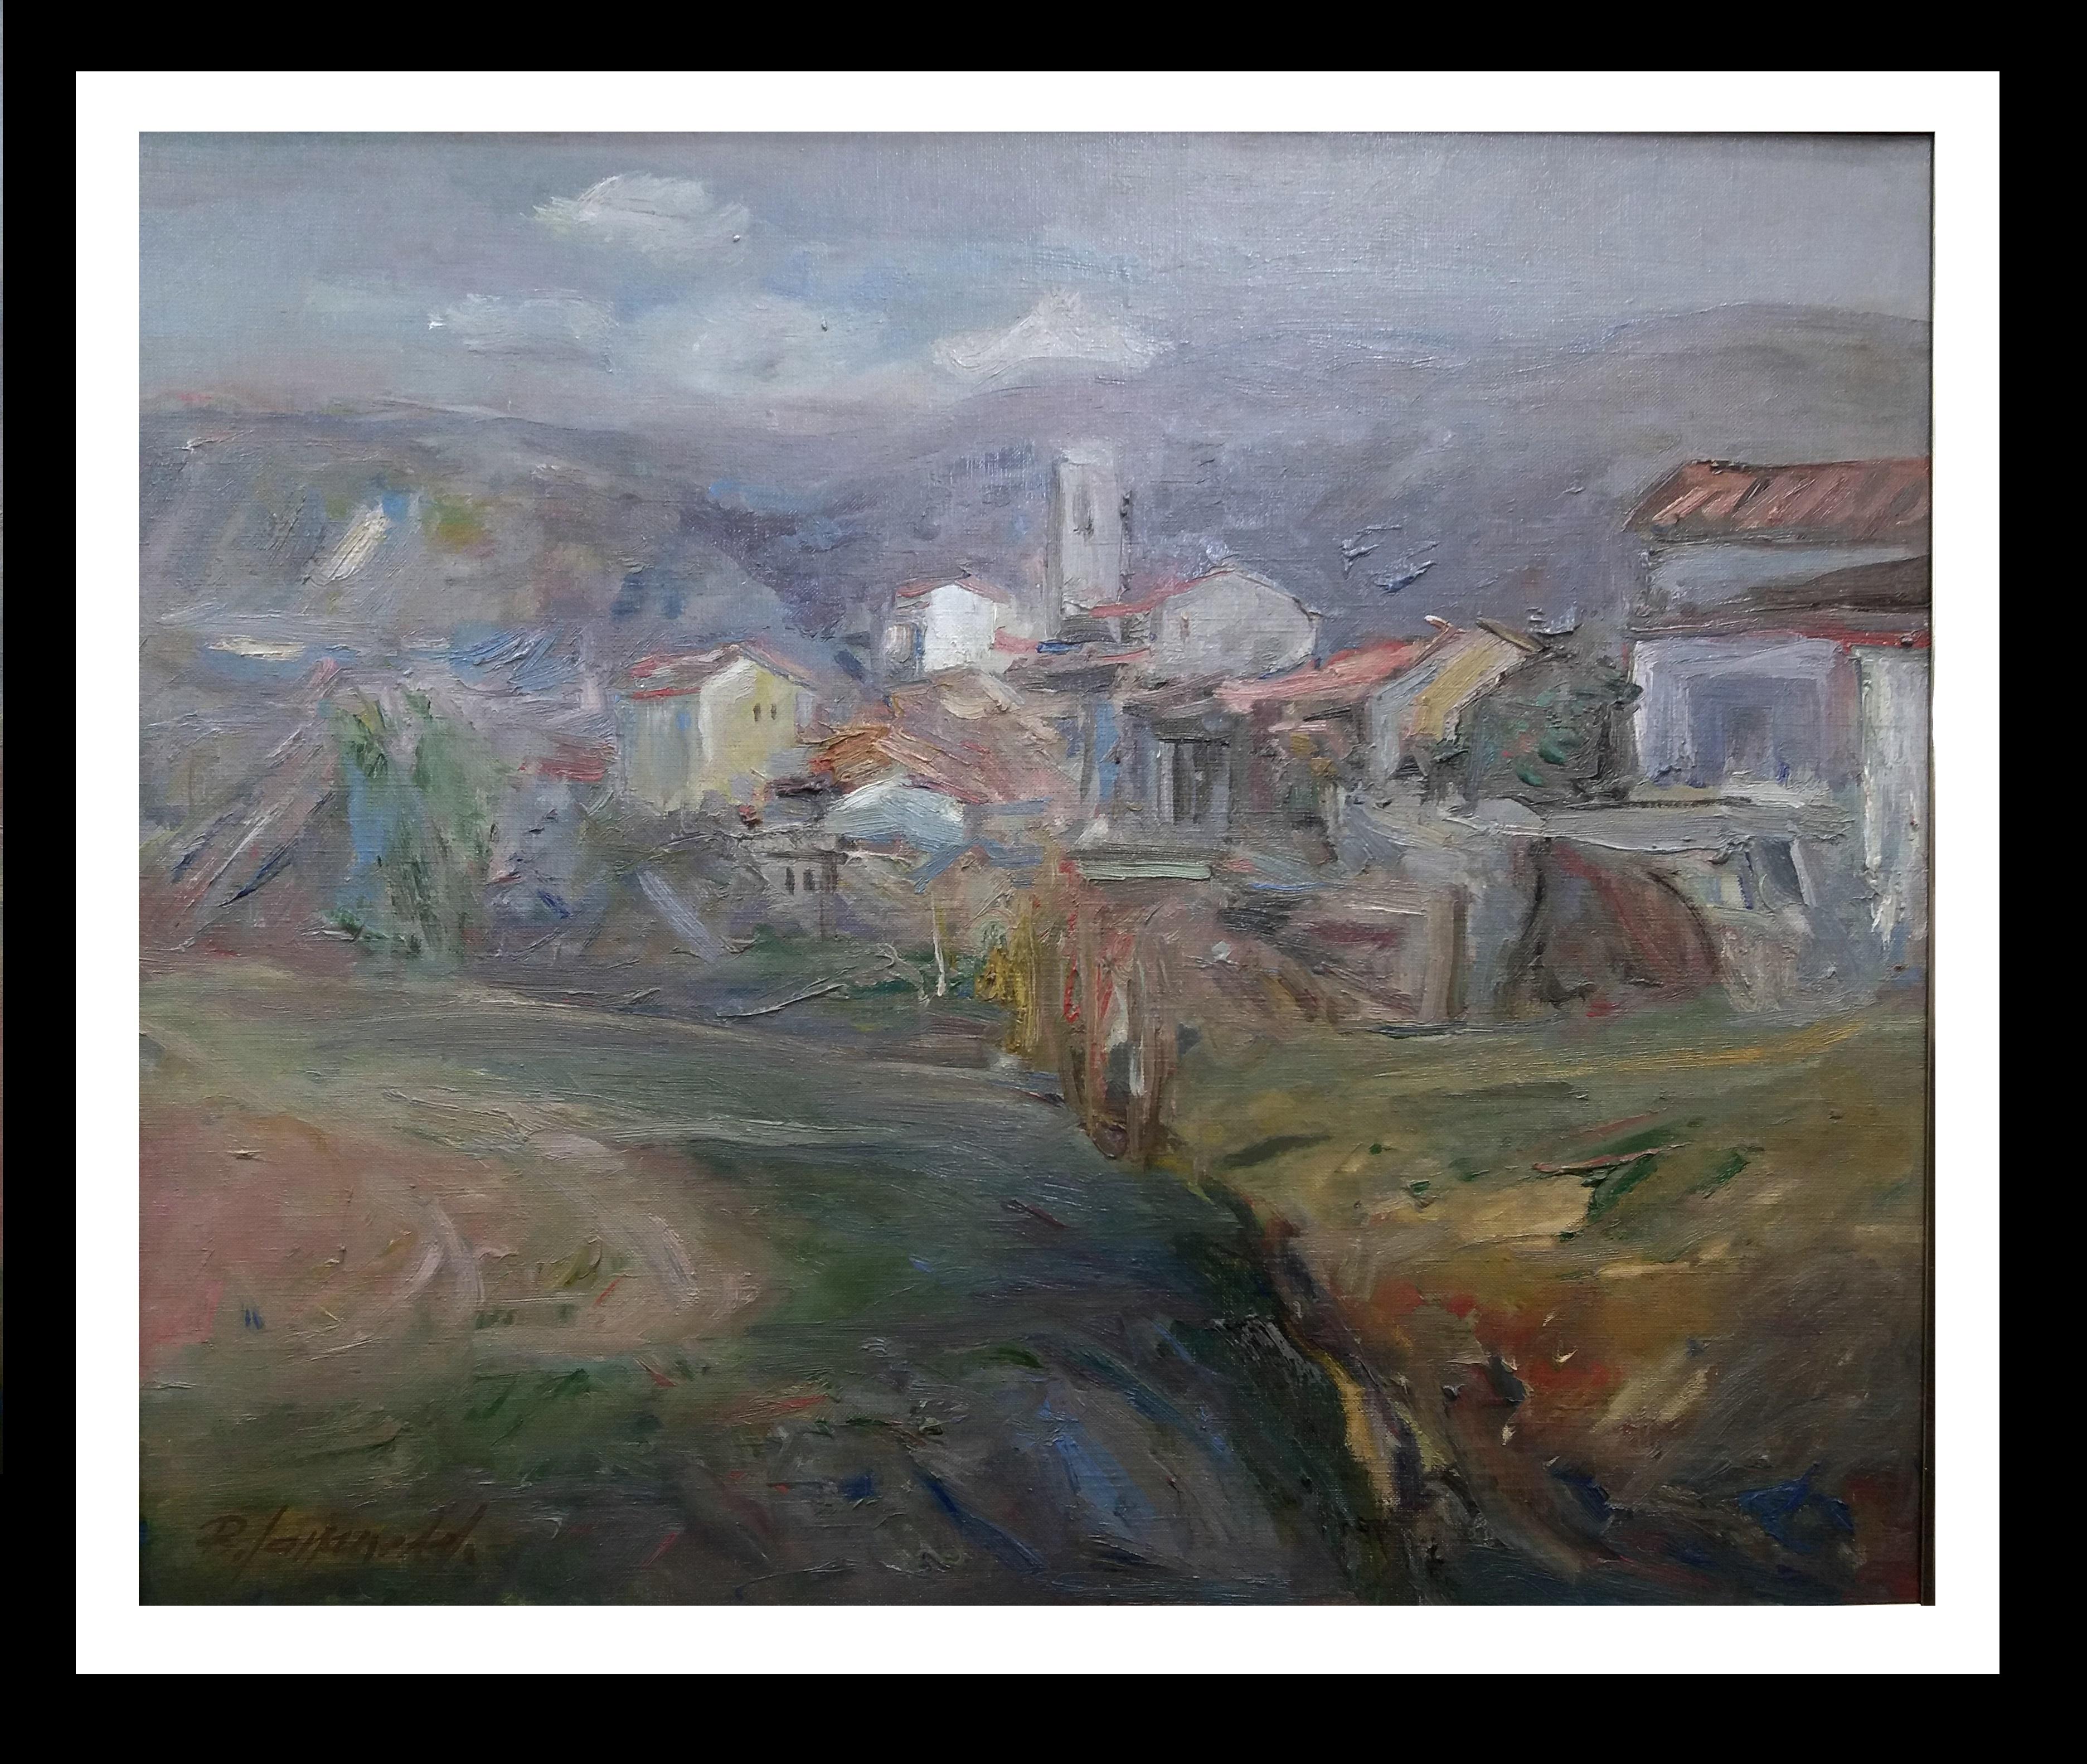 Benet Sarsanedas Landscape Painting - B. Sarsanedas. Mountain village. "Rupit".  Original   canvas painting 1975